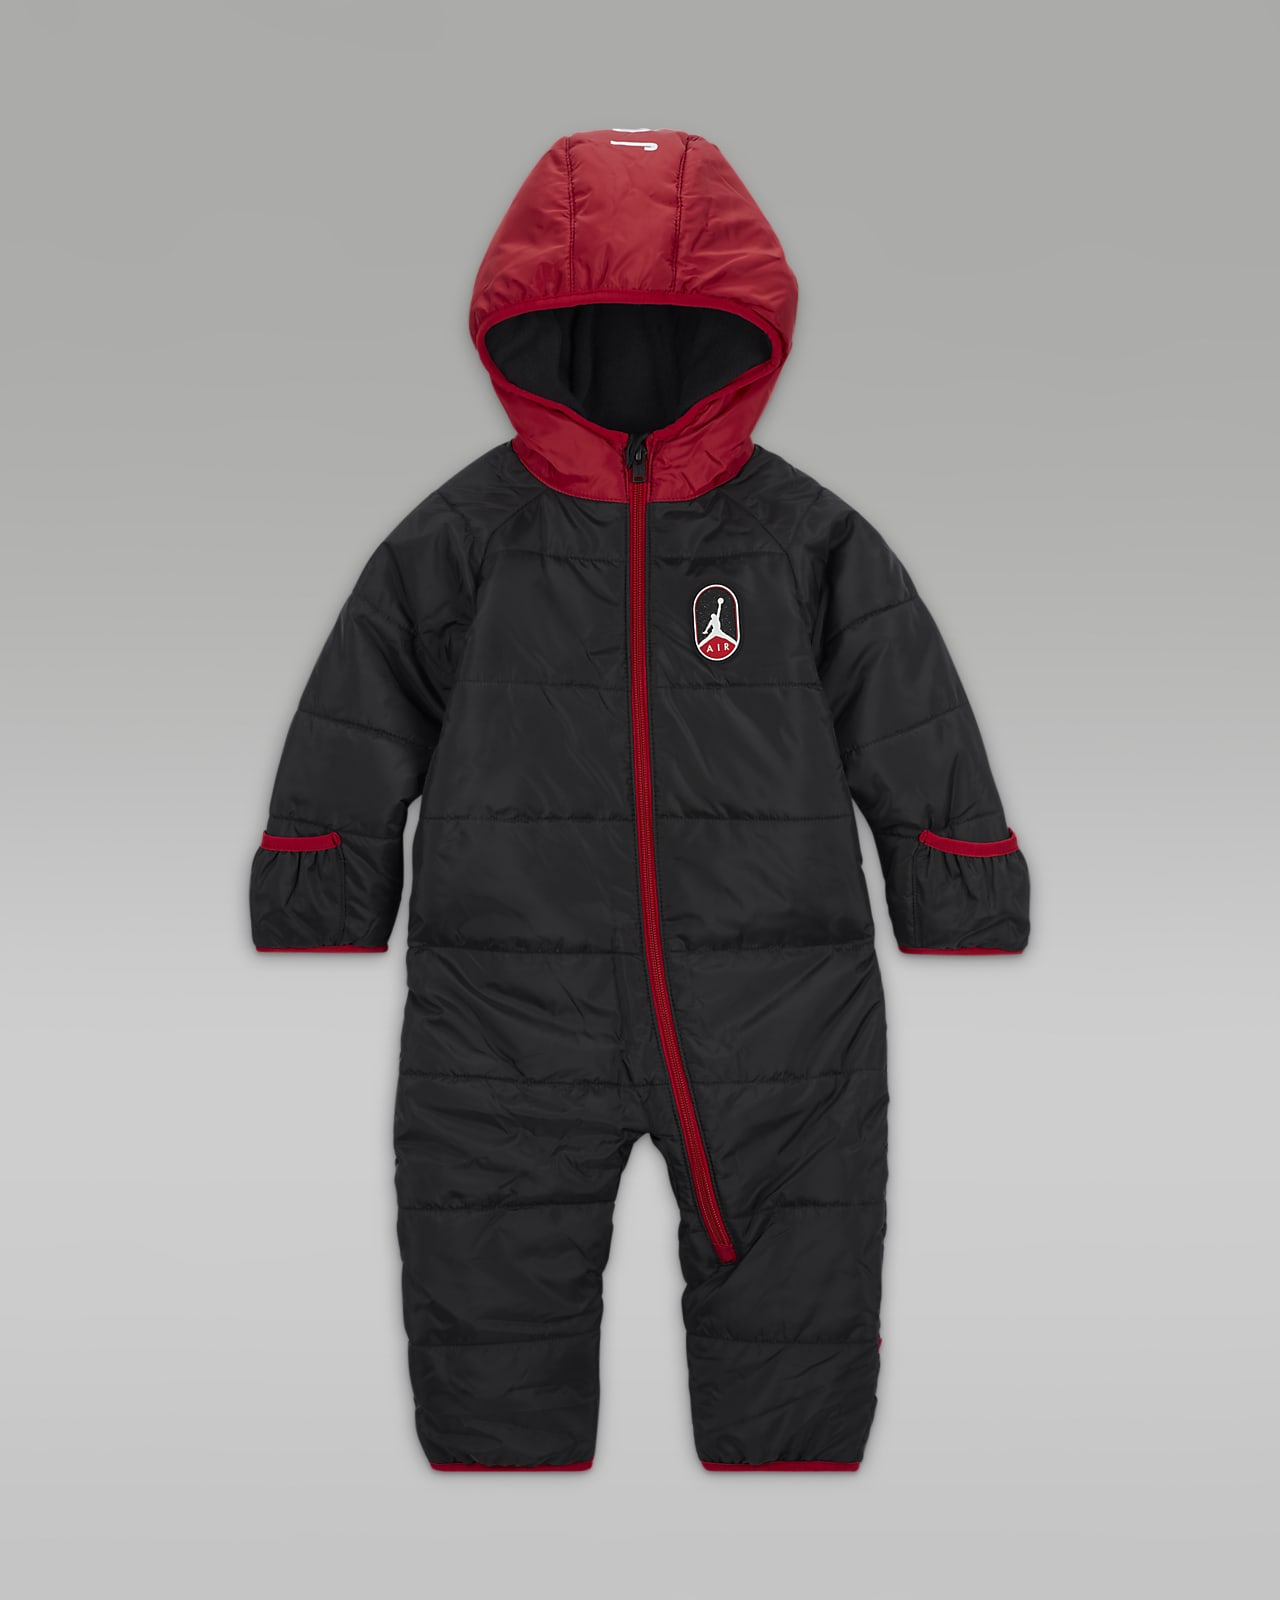 Jordan Baby Snowsuit Baby (12-24M) Snowsuit